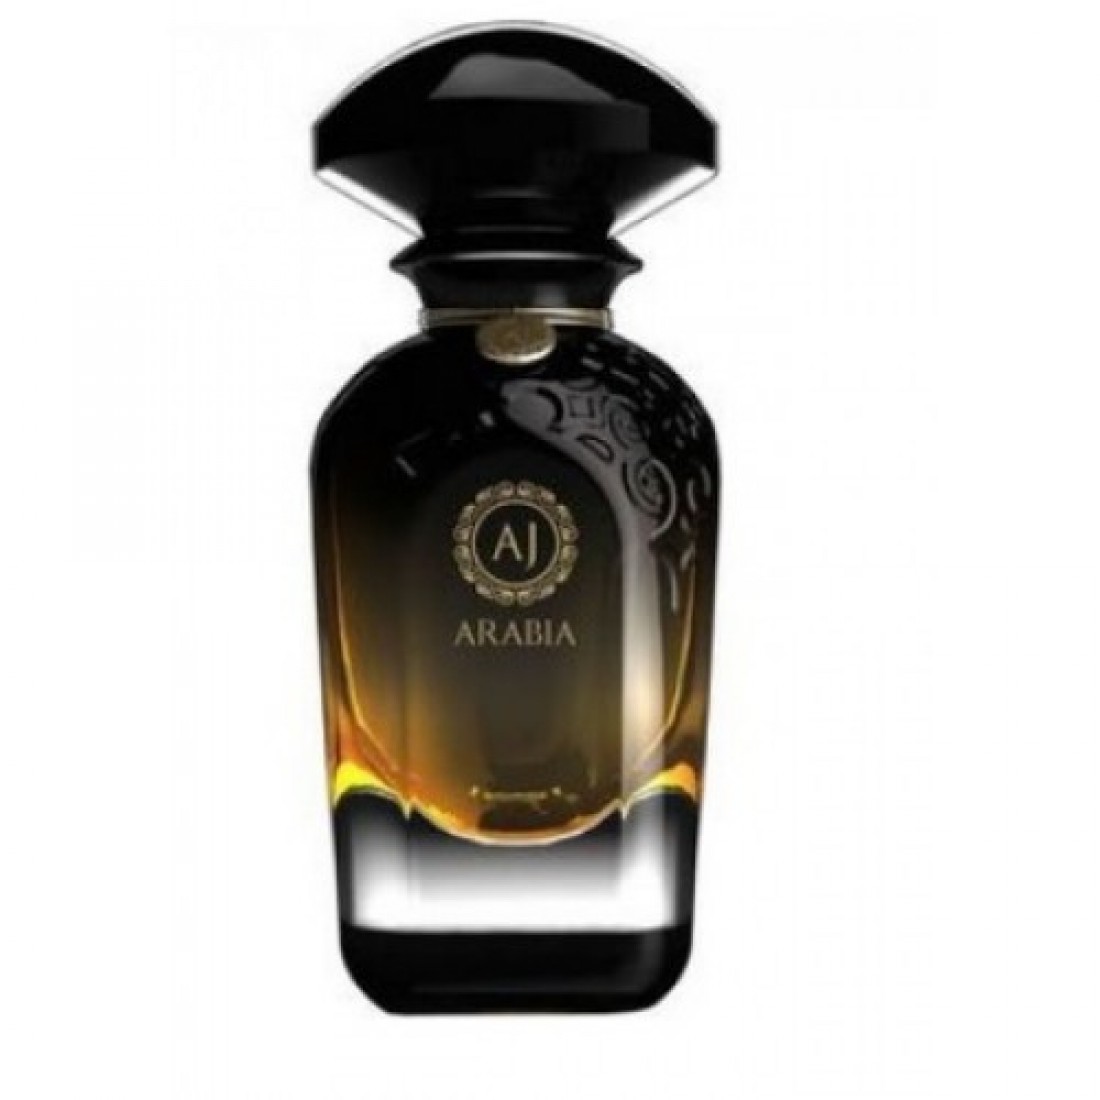 Arabia 1. AJ Arabia Widian Black 1 духи (тестер) 50 мл. Widian AJ Arabia - Black collection i. Духи Widian AJ Arabia 2. AJ Arabia Widian Black 2 Parfum.